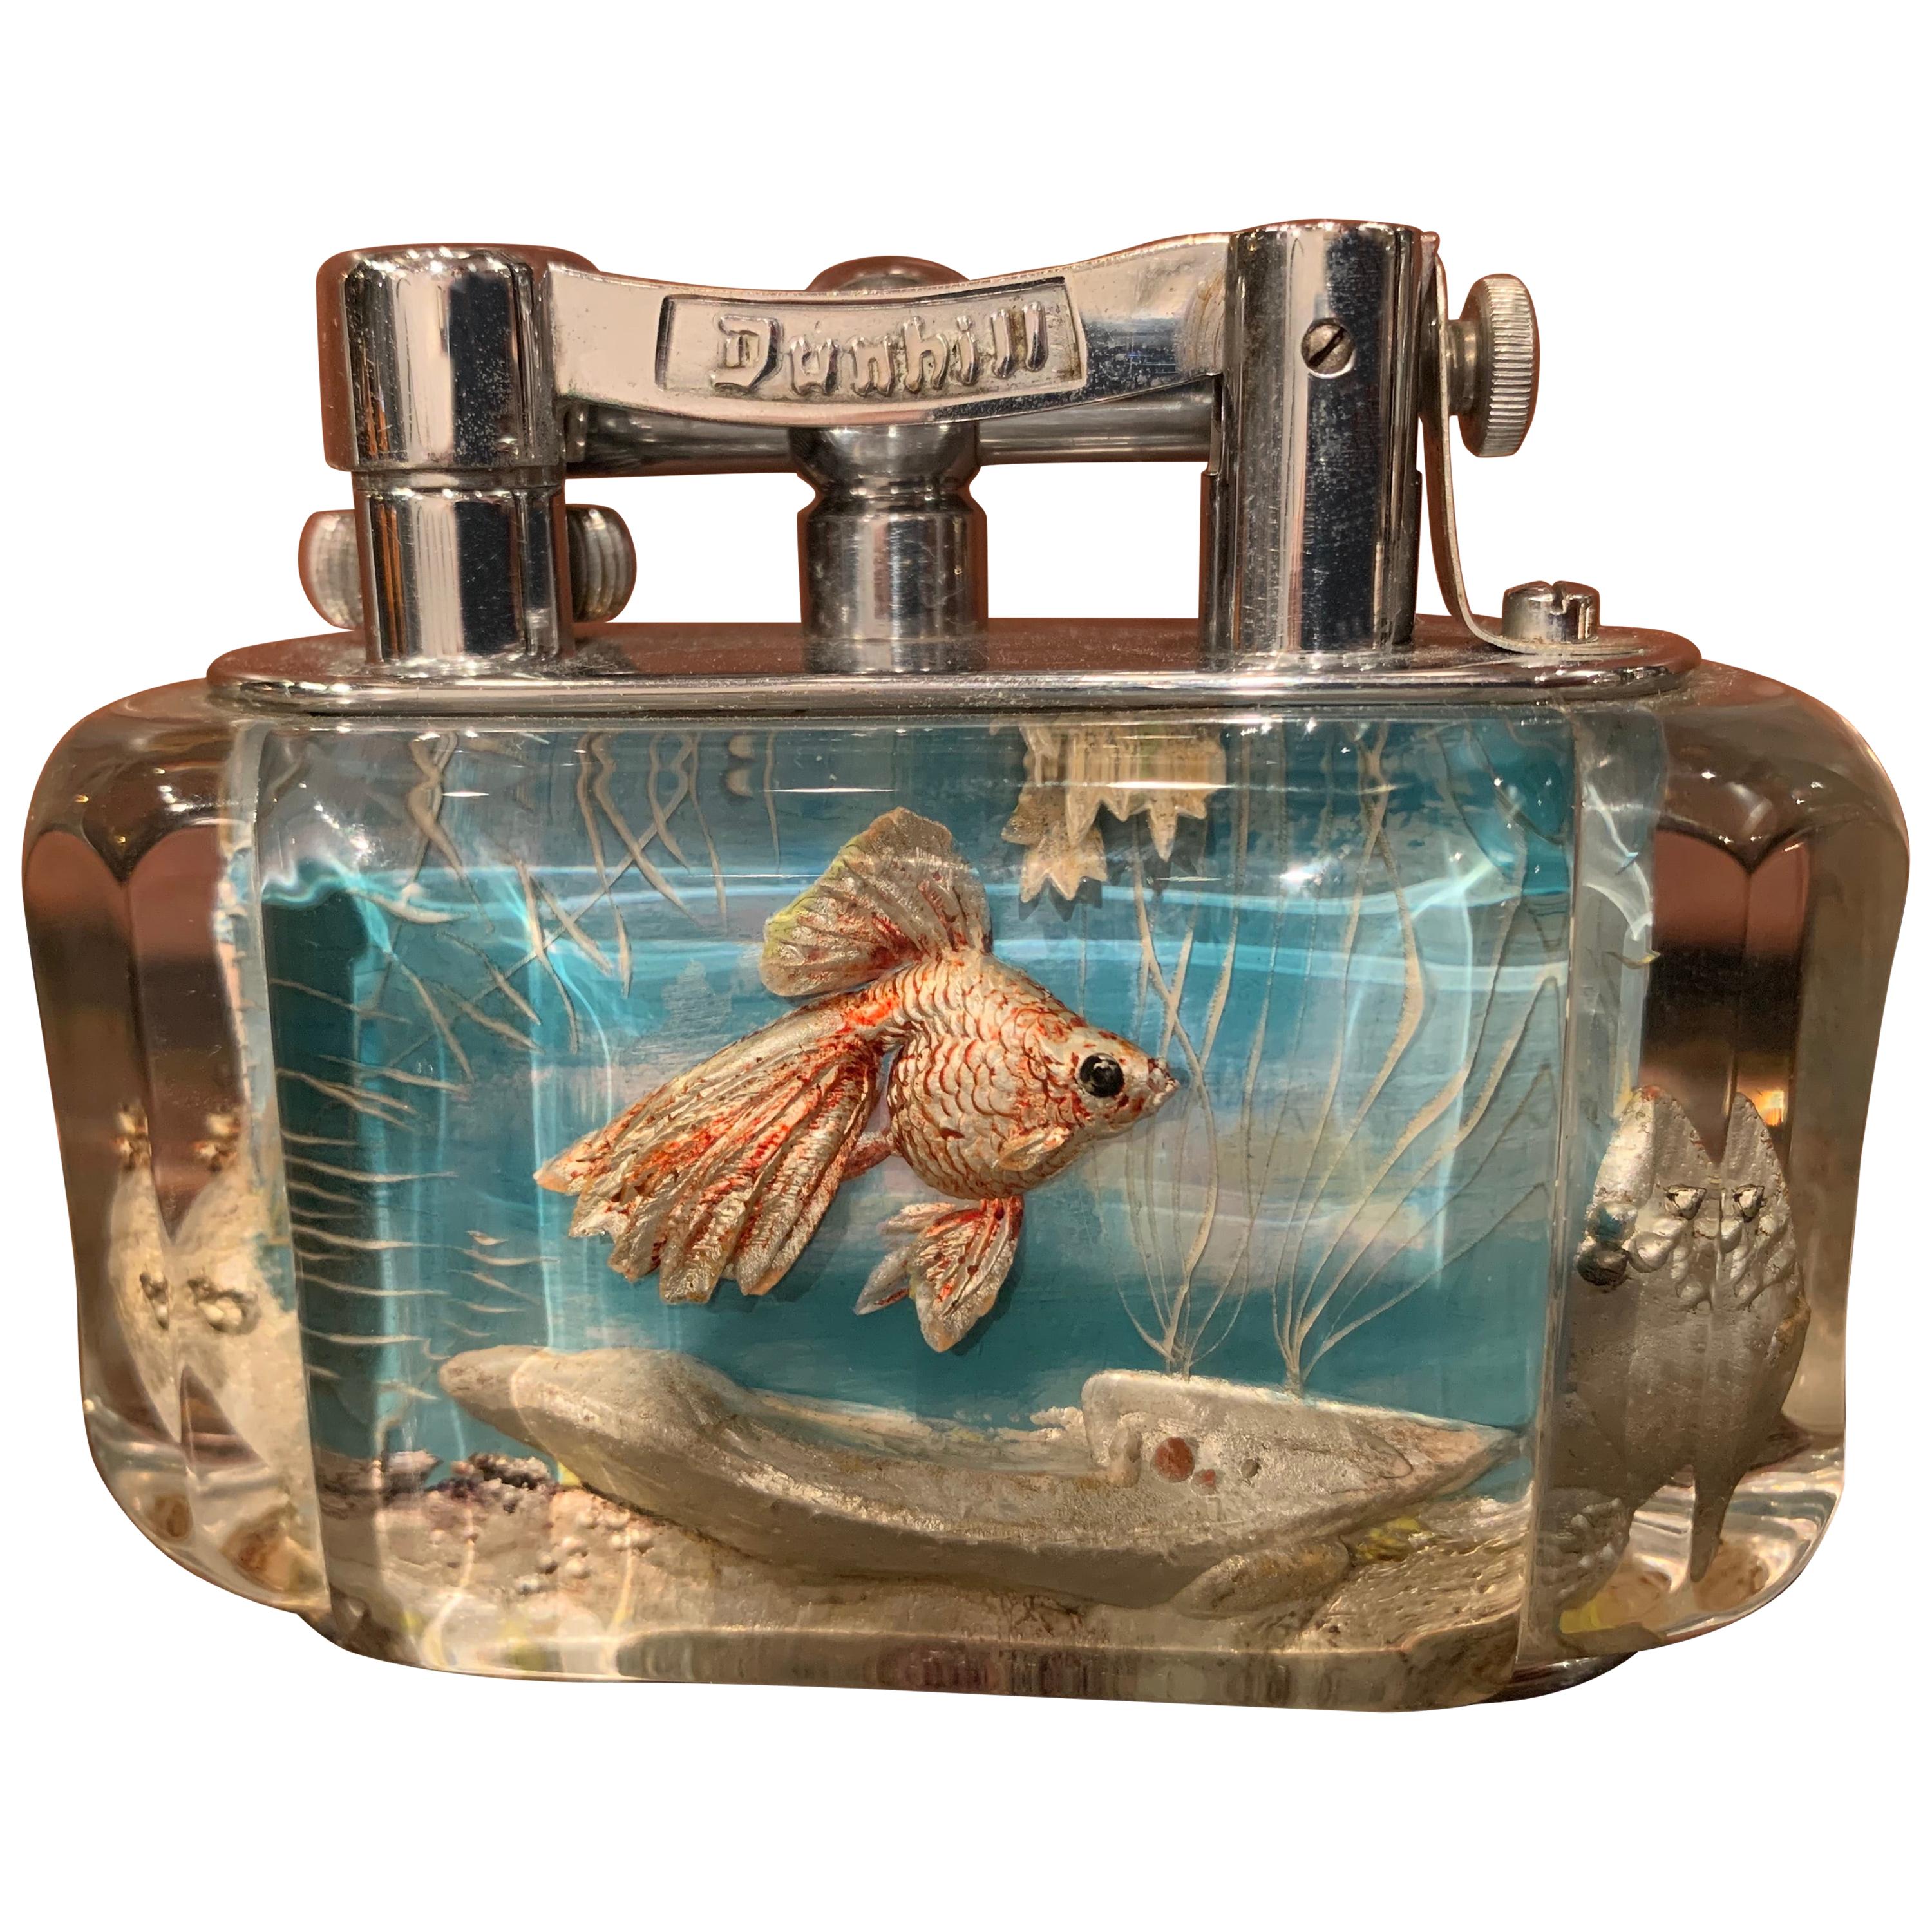 Rare 1950s Dunhill Aquarium Half-Giant Lighter, Chrome Plated, Made in England